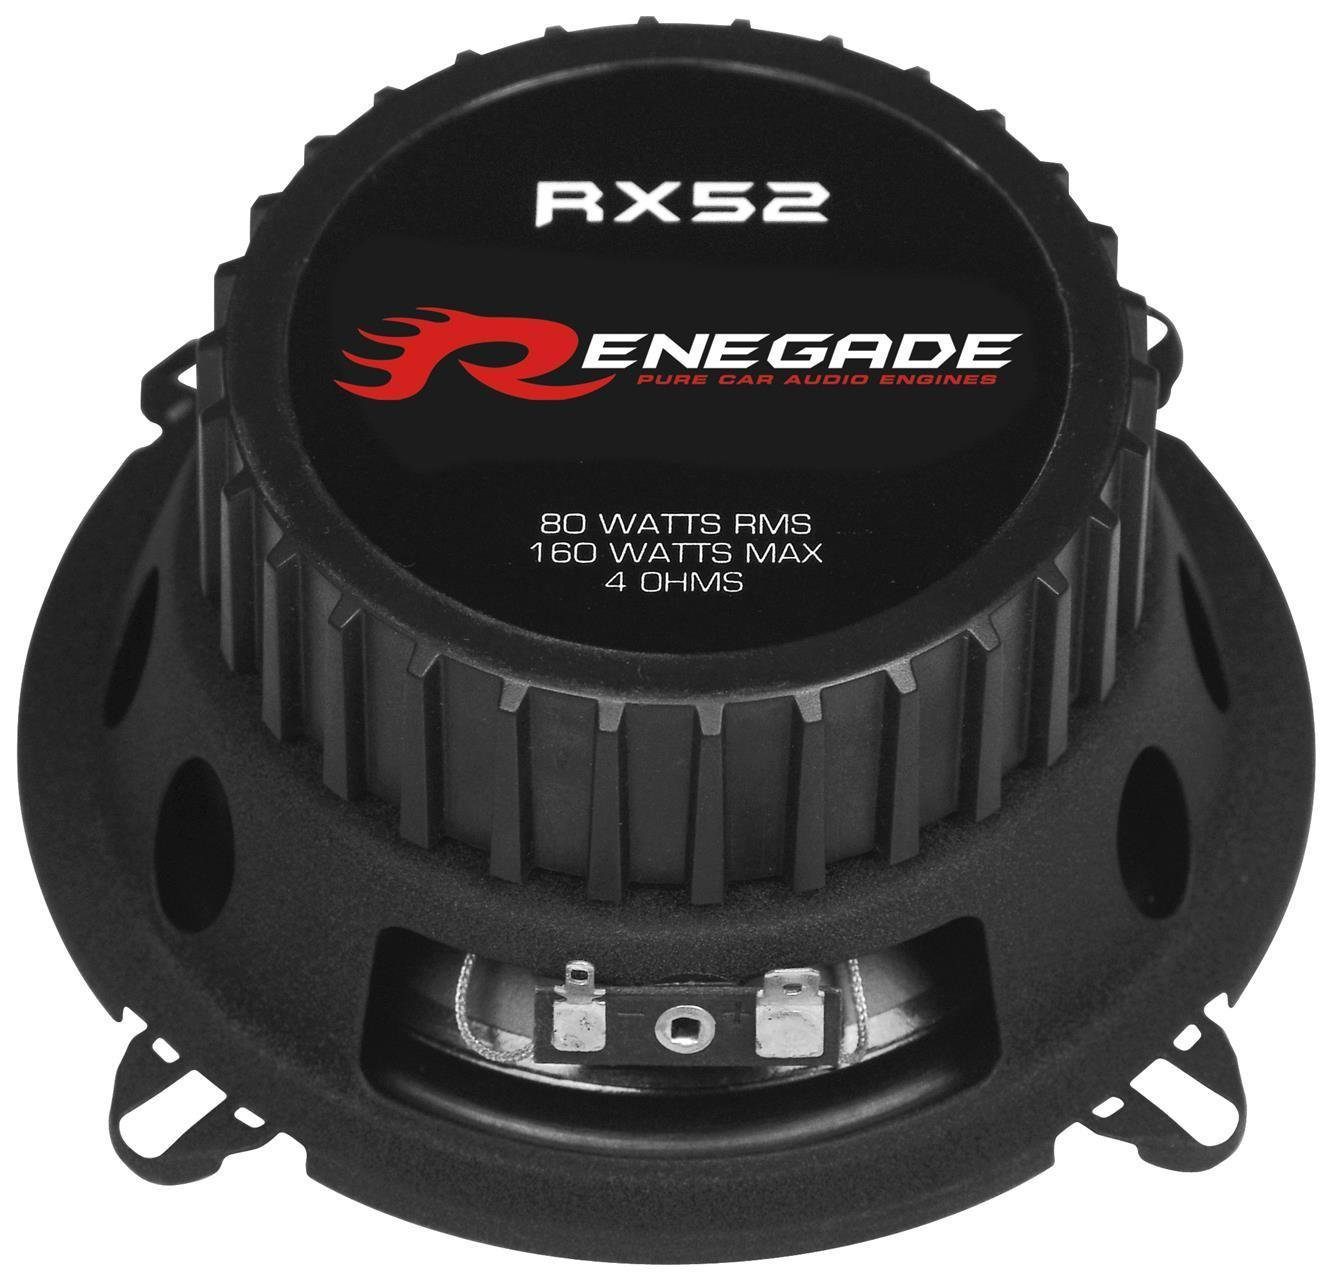 Auto-Lautsprecher Renegade RX-52 Renegade